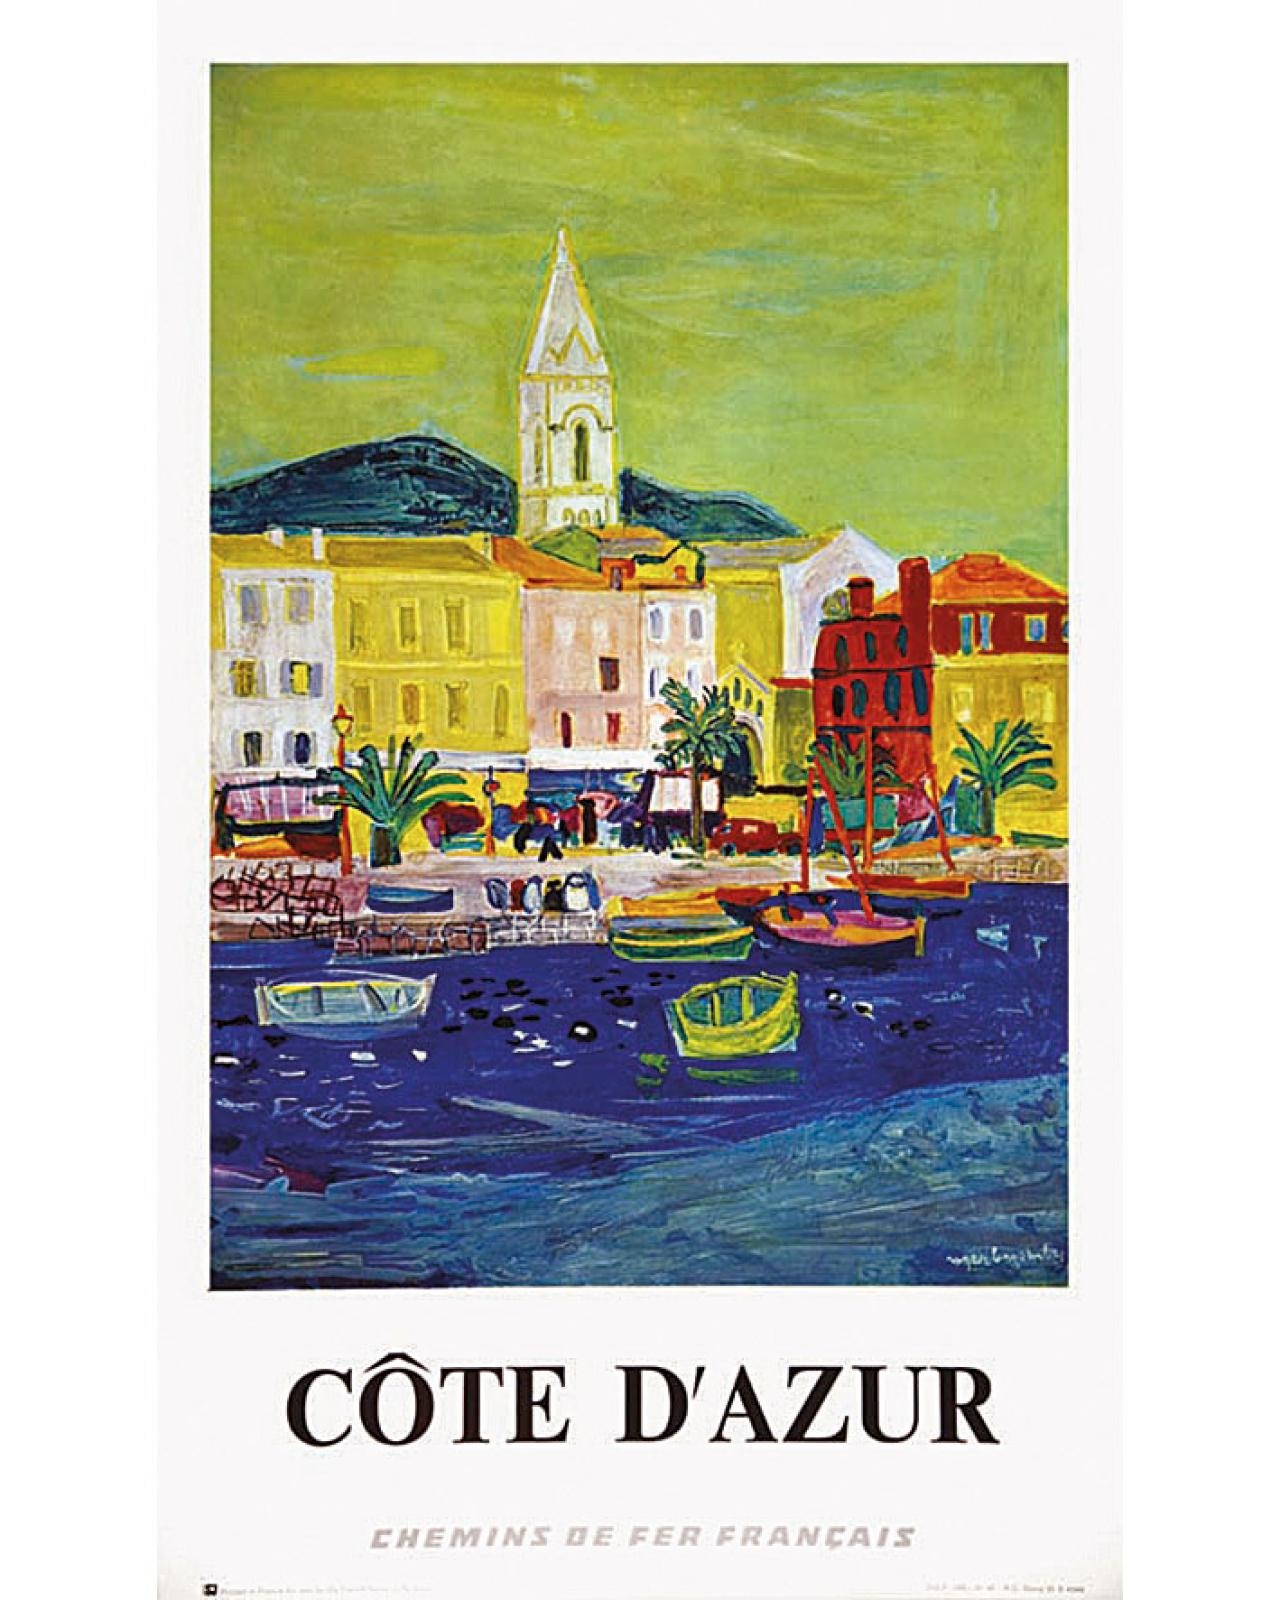 1947 Cote d'Azur French Riviera Vintage Travel Poster Canvas Print